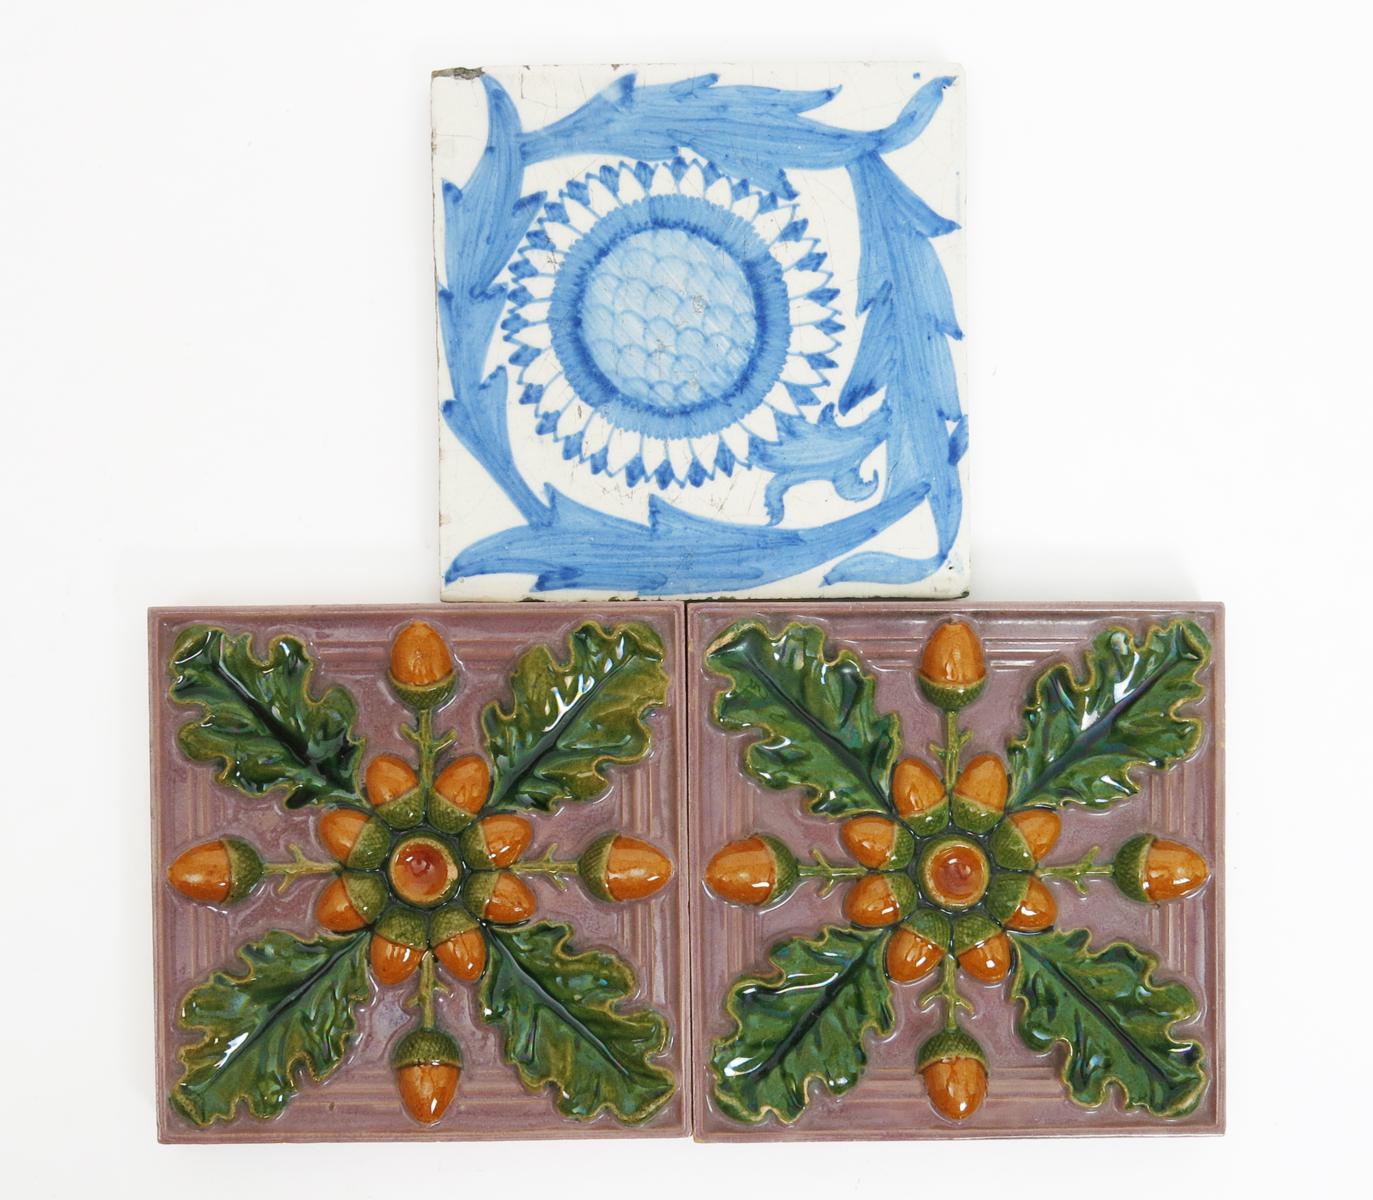 A Dutch Sunflower tin glaze tile designed by William Morris or William De Morgan, painted in